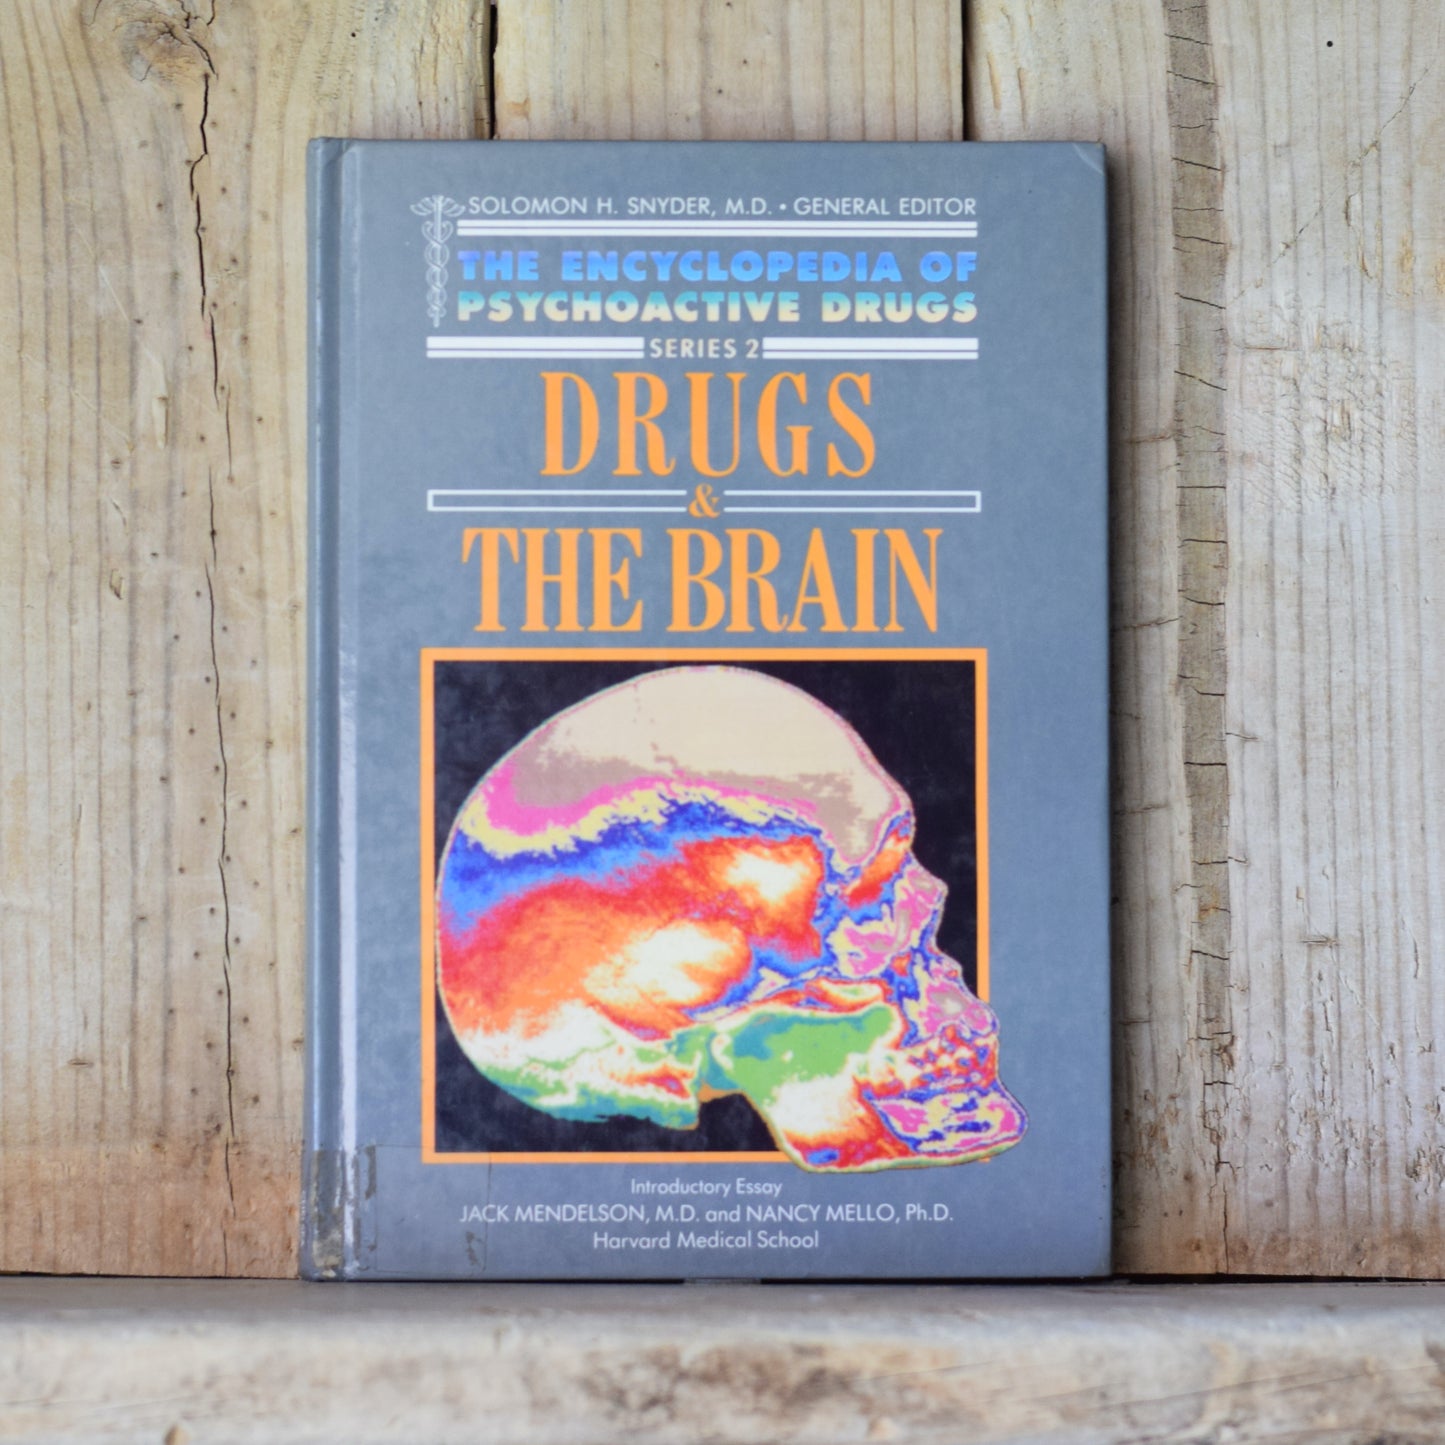 Non-fiction Hardback: Jack Mendelson MD & Nancy Mello PhD - Drugs & the Brain, The Encyclopedia of Psychoactive Drugs, Series 2